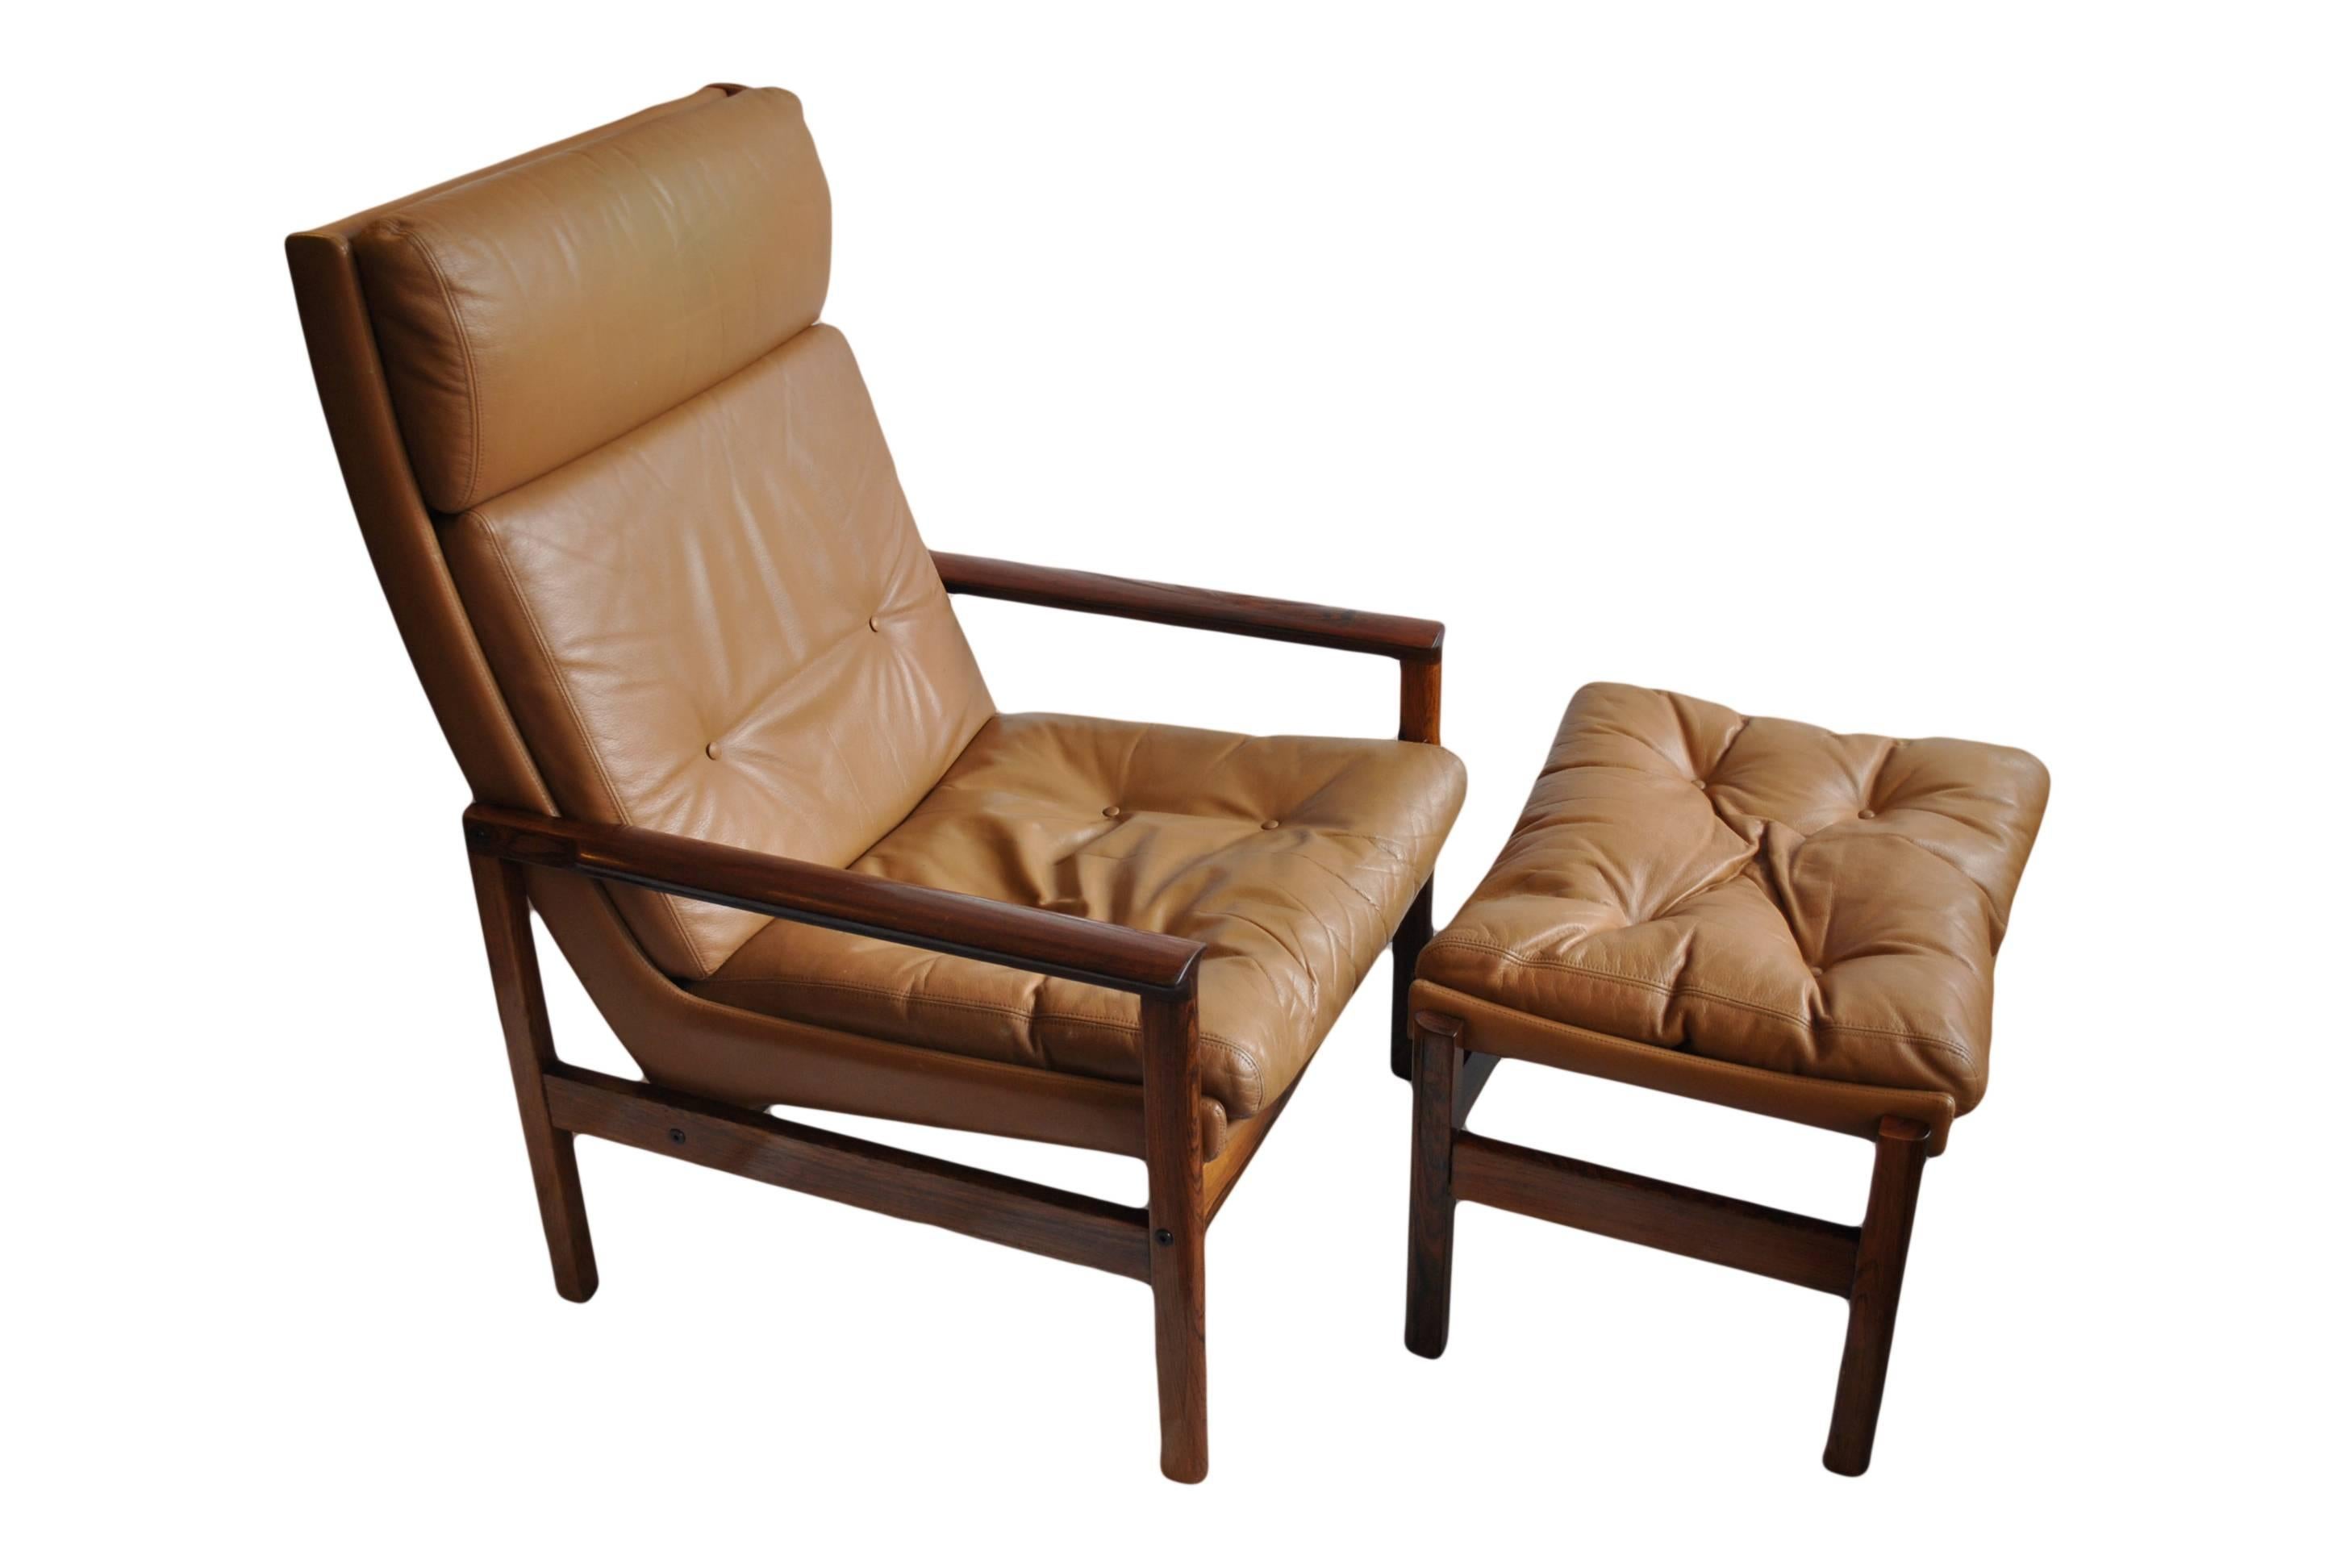 Norwegian Mid-Century leather armchair and ottoman.